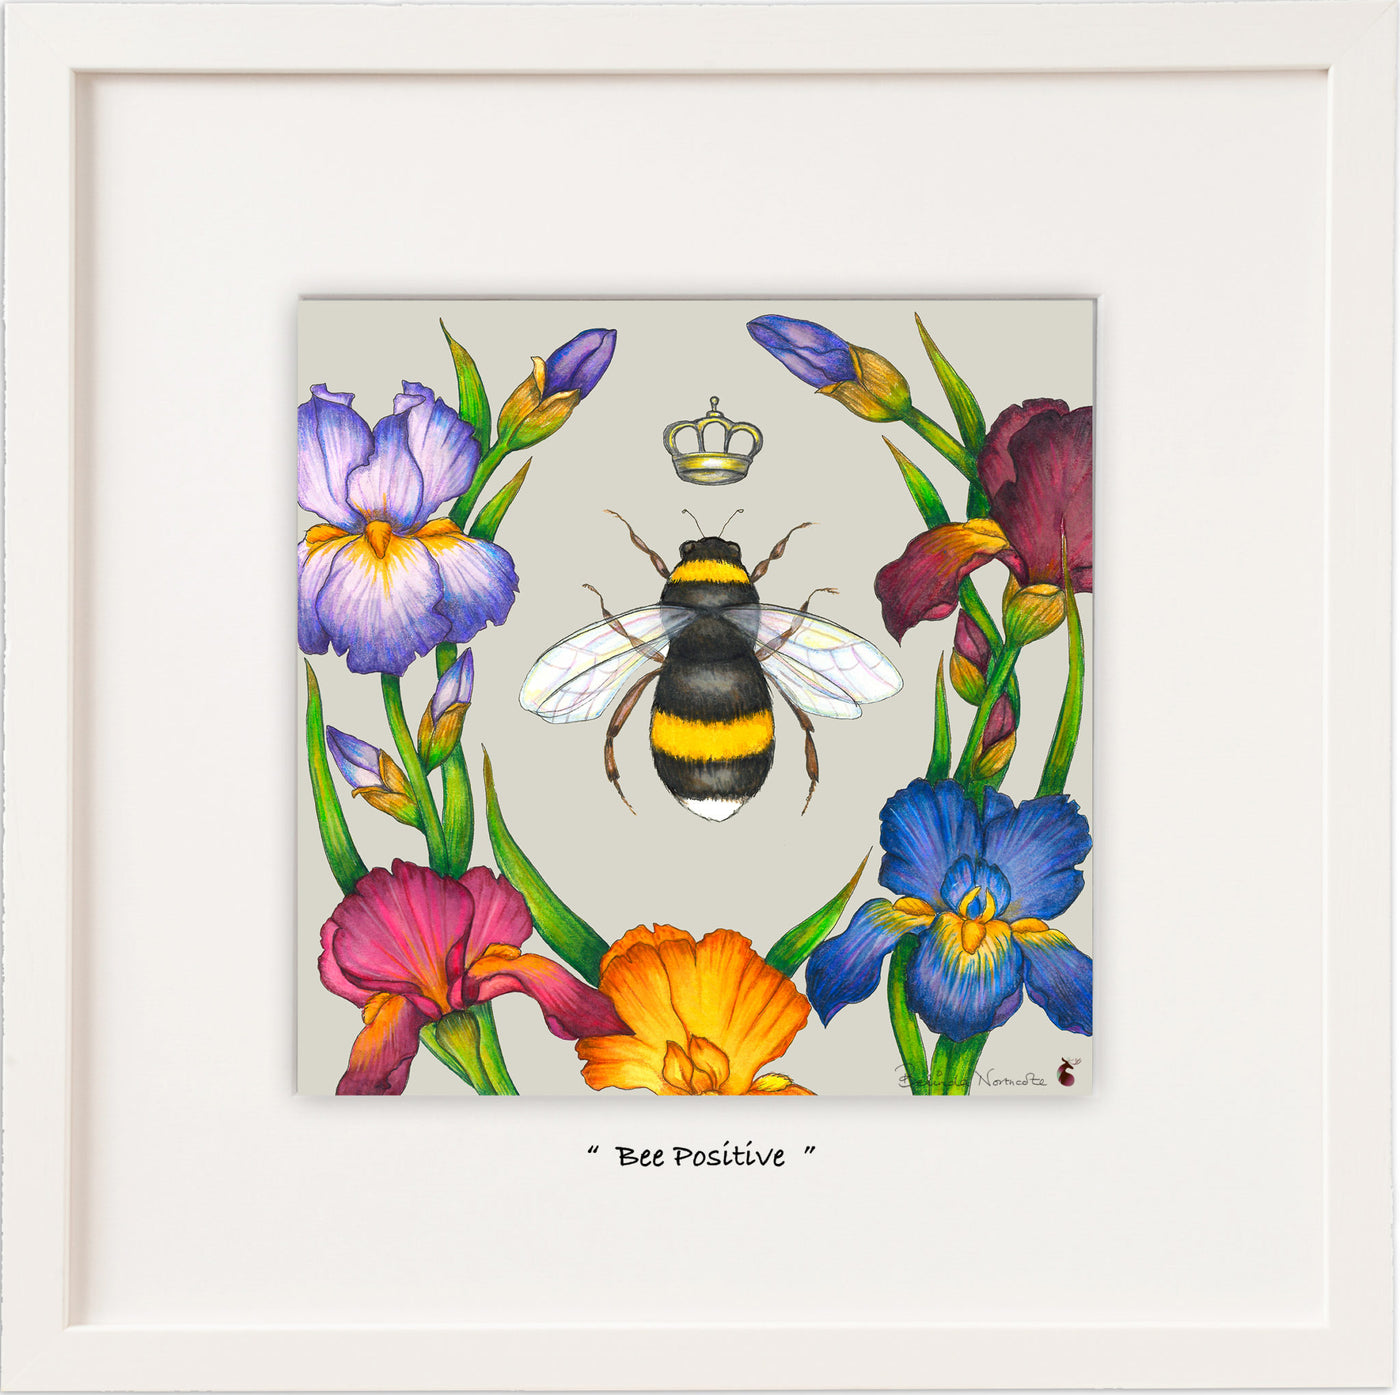 Belinda Northcote 'Bee Positive' Framed Print**